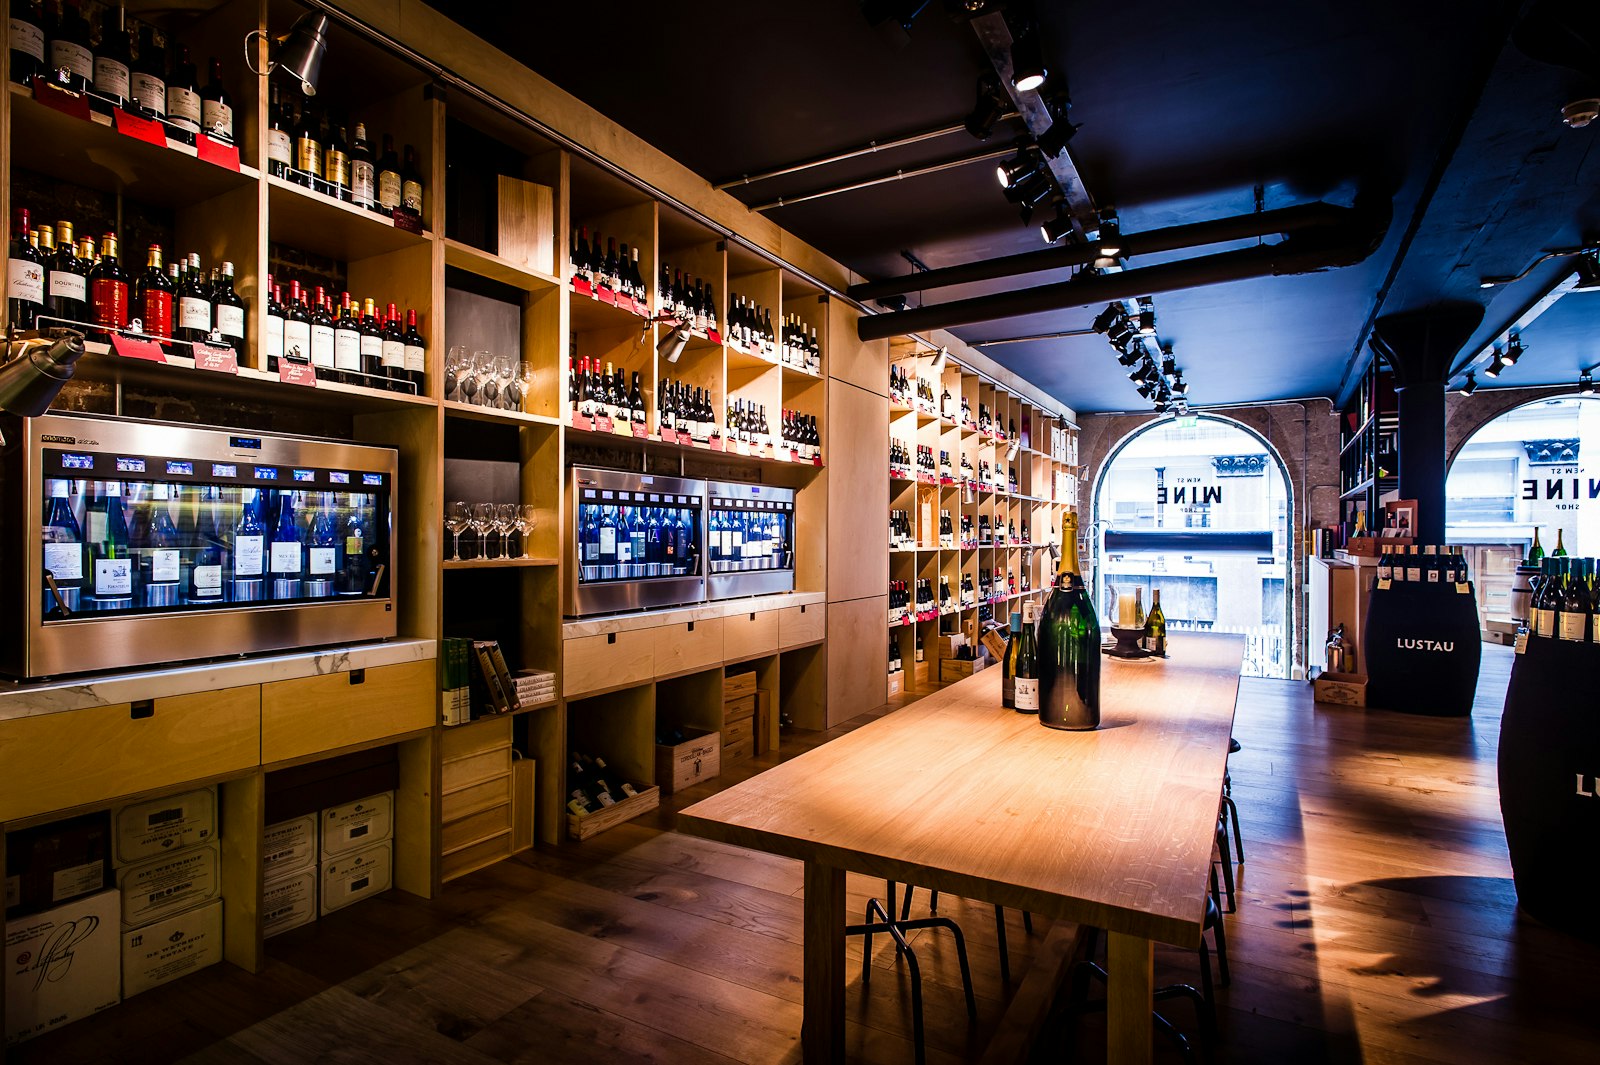 New Street Wine Shop  - Whole Venue  image 4